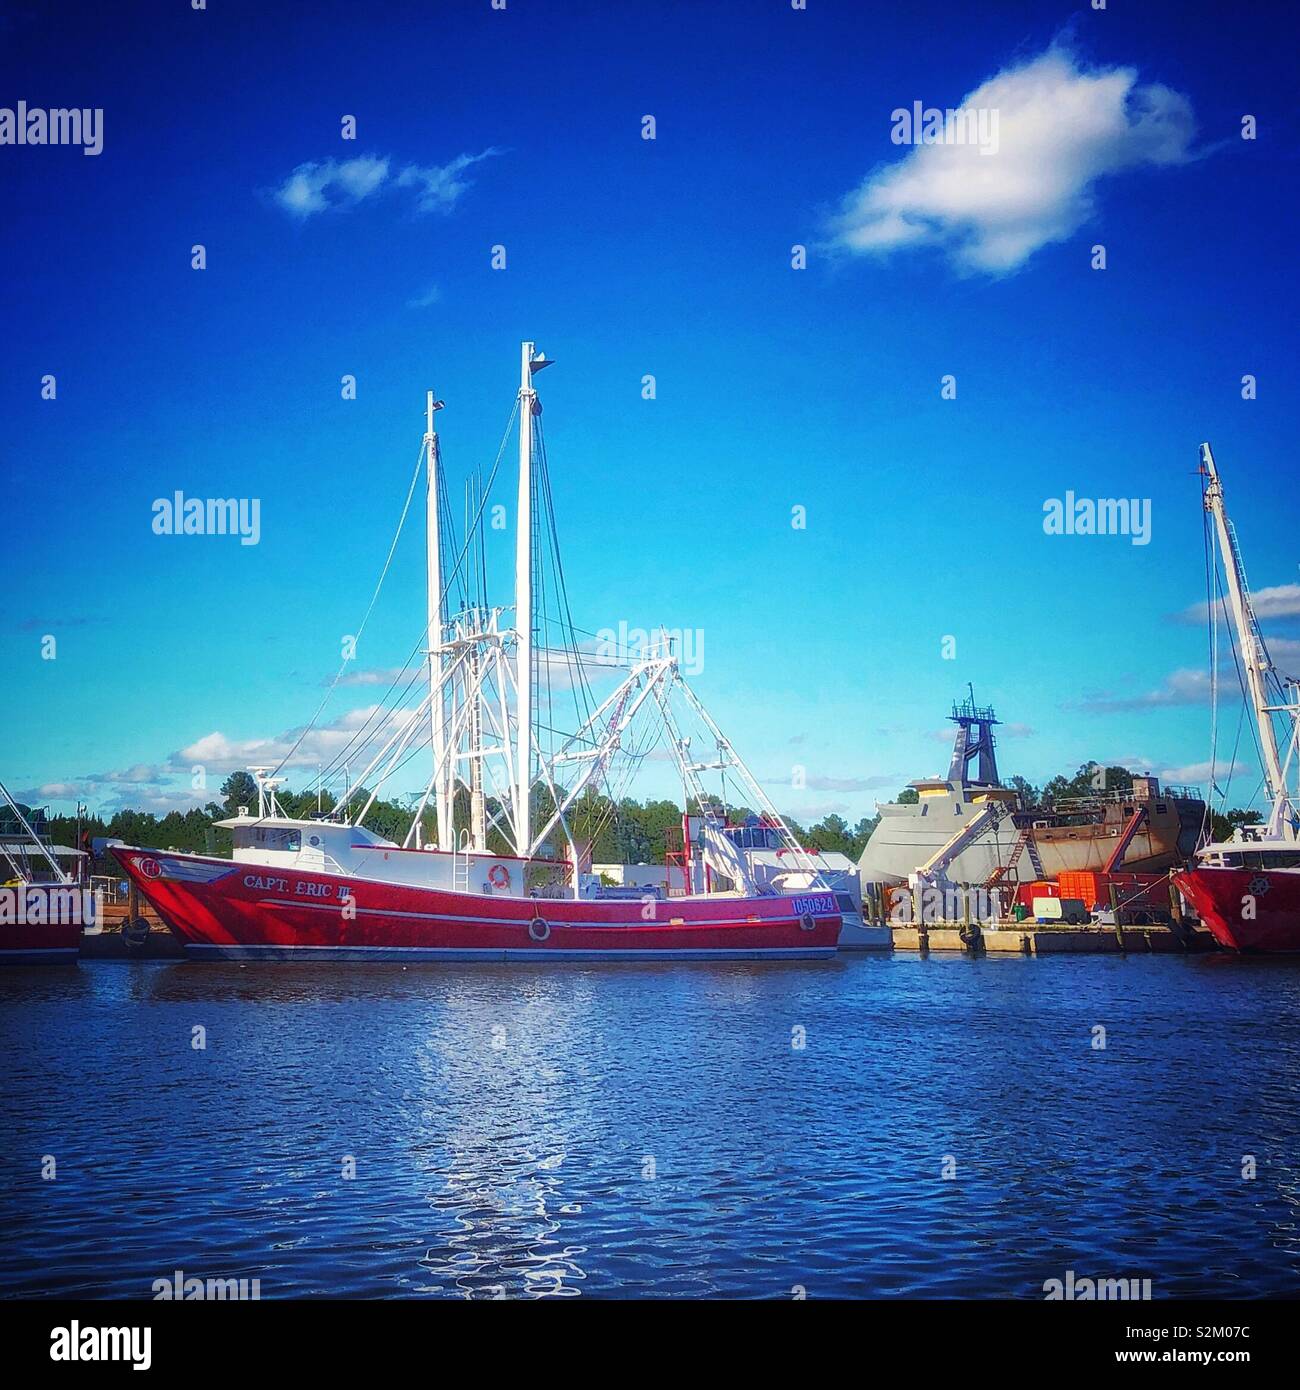 A shrimp boat is docked on a sunny day in Bayou La Batre, Alabama. Stock Photo